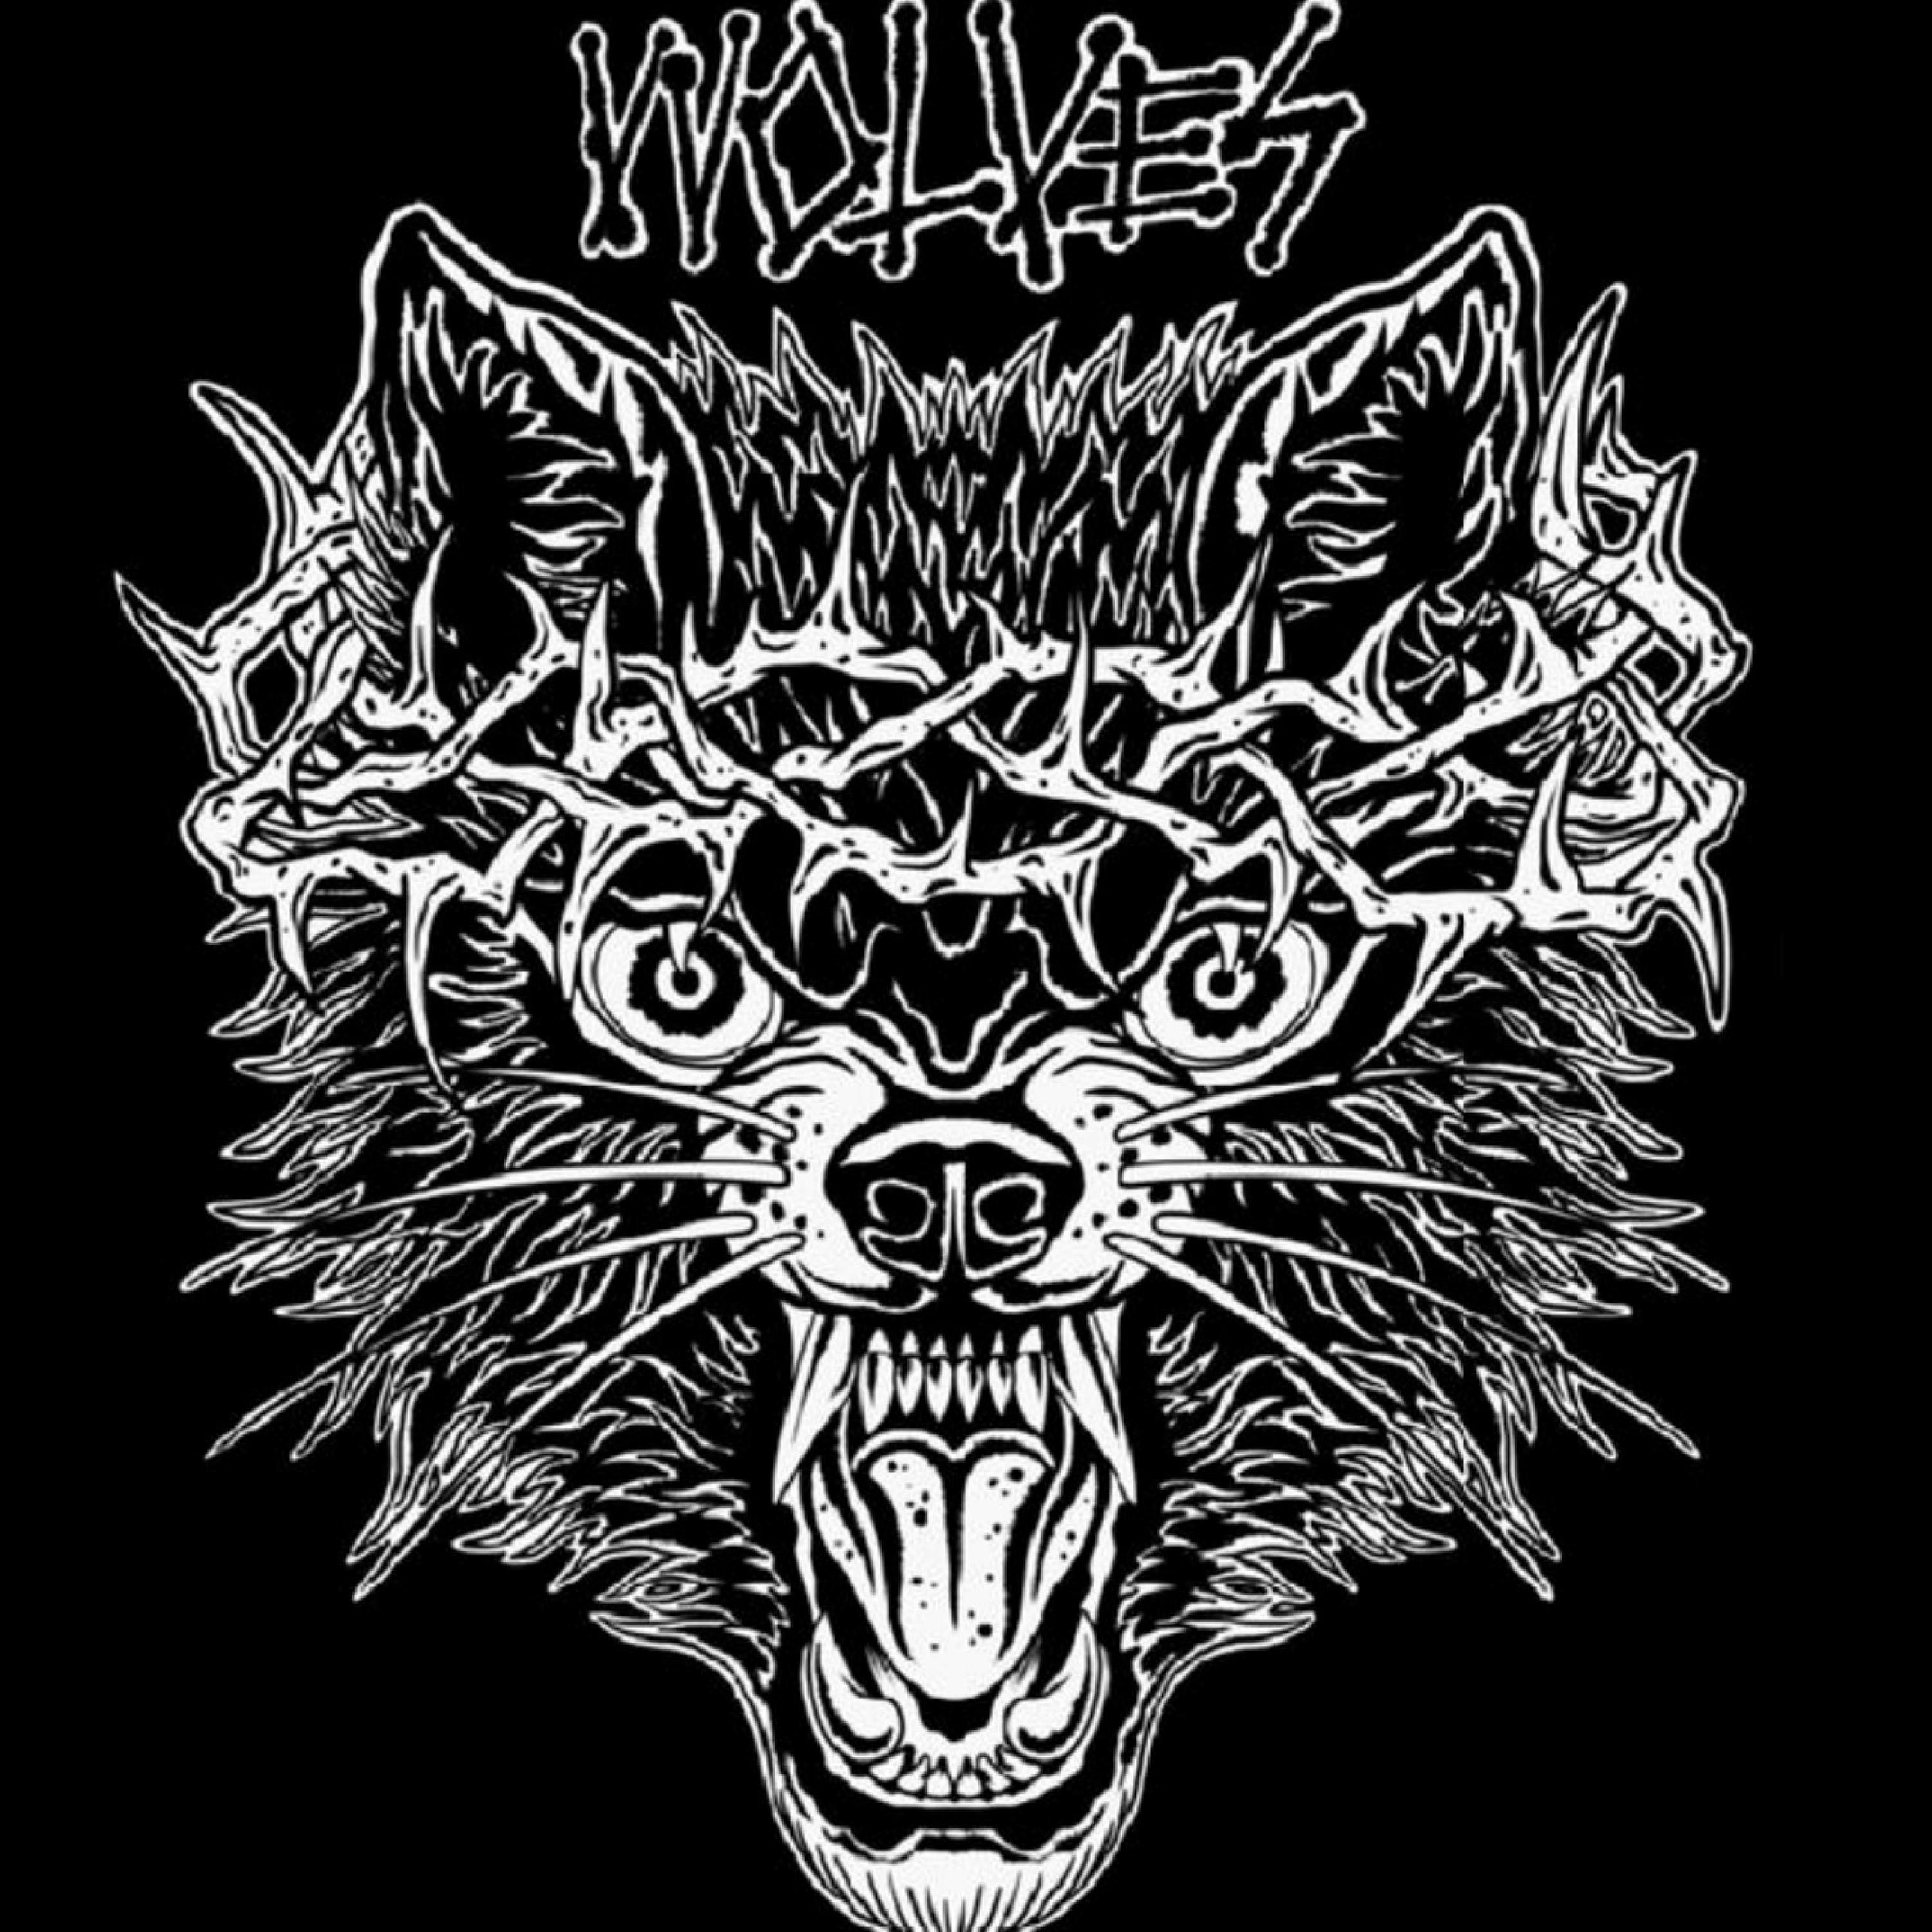 Wolves - Animal Instinct/Tried For Treason